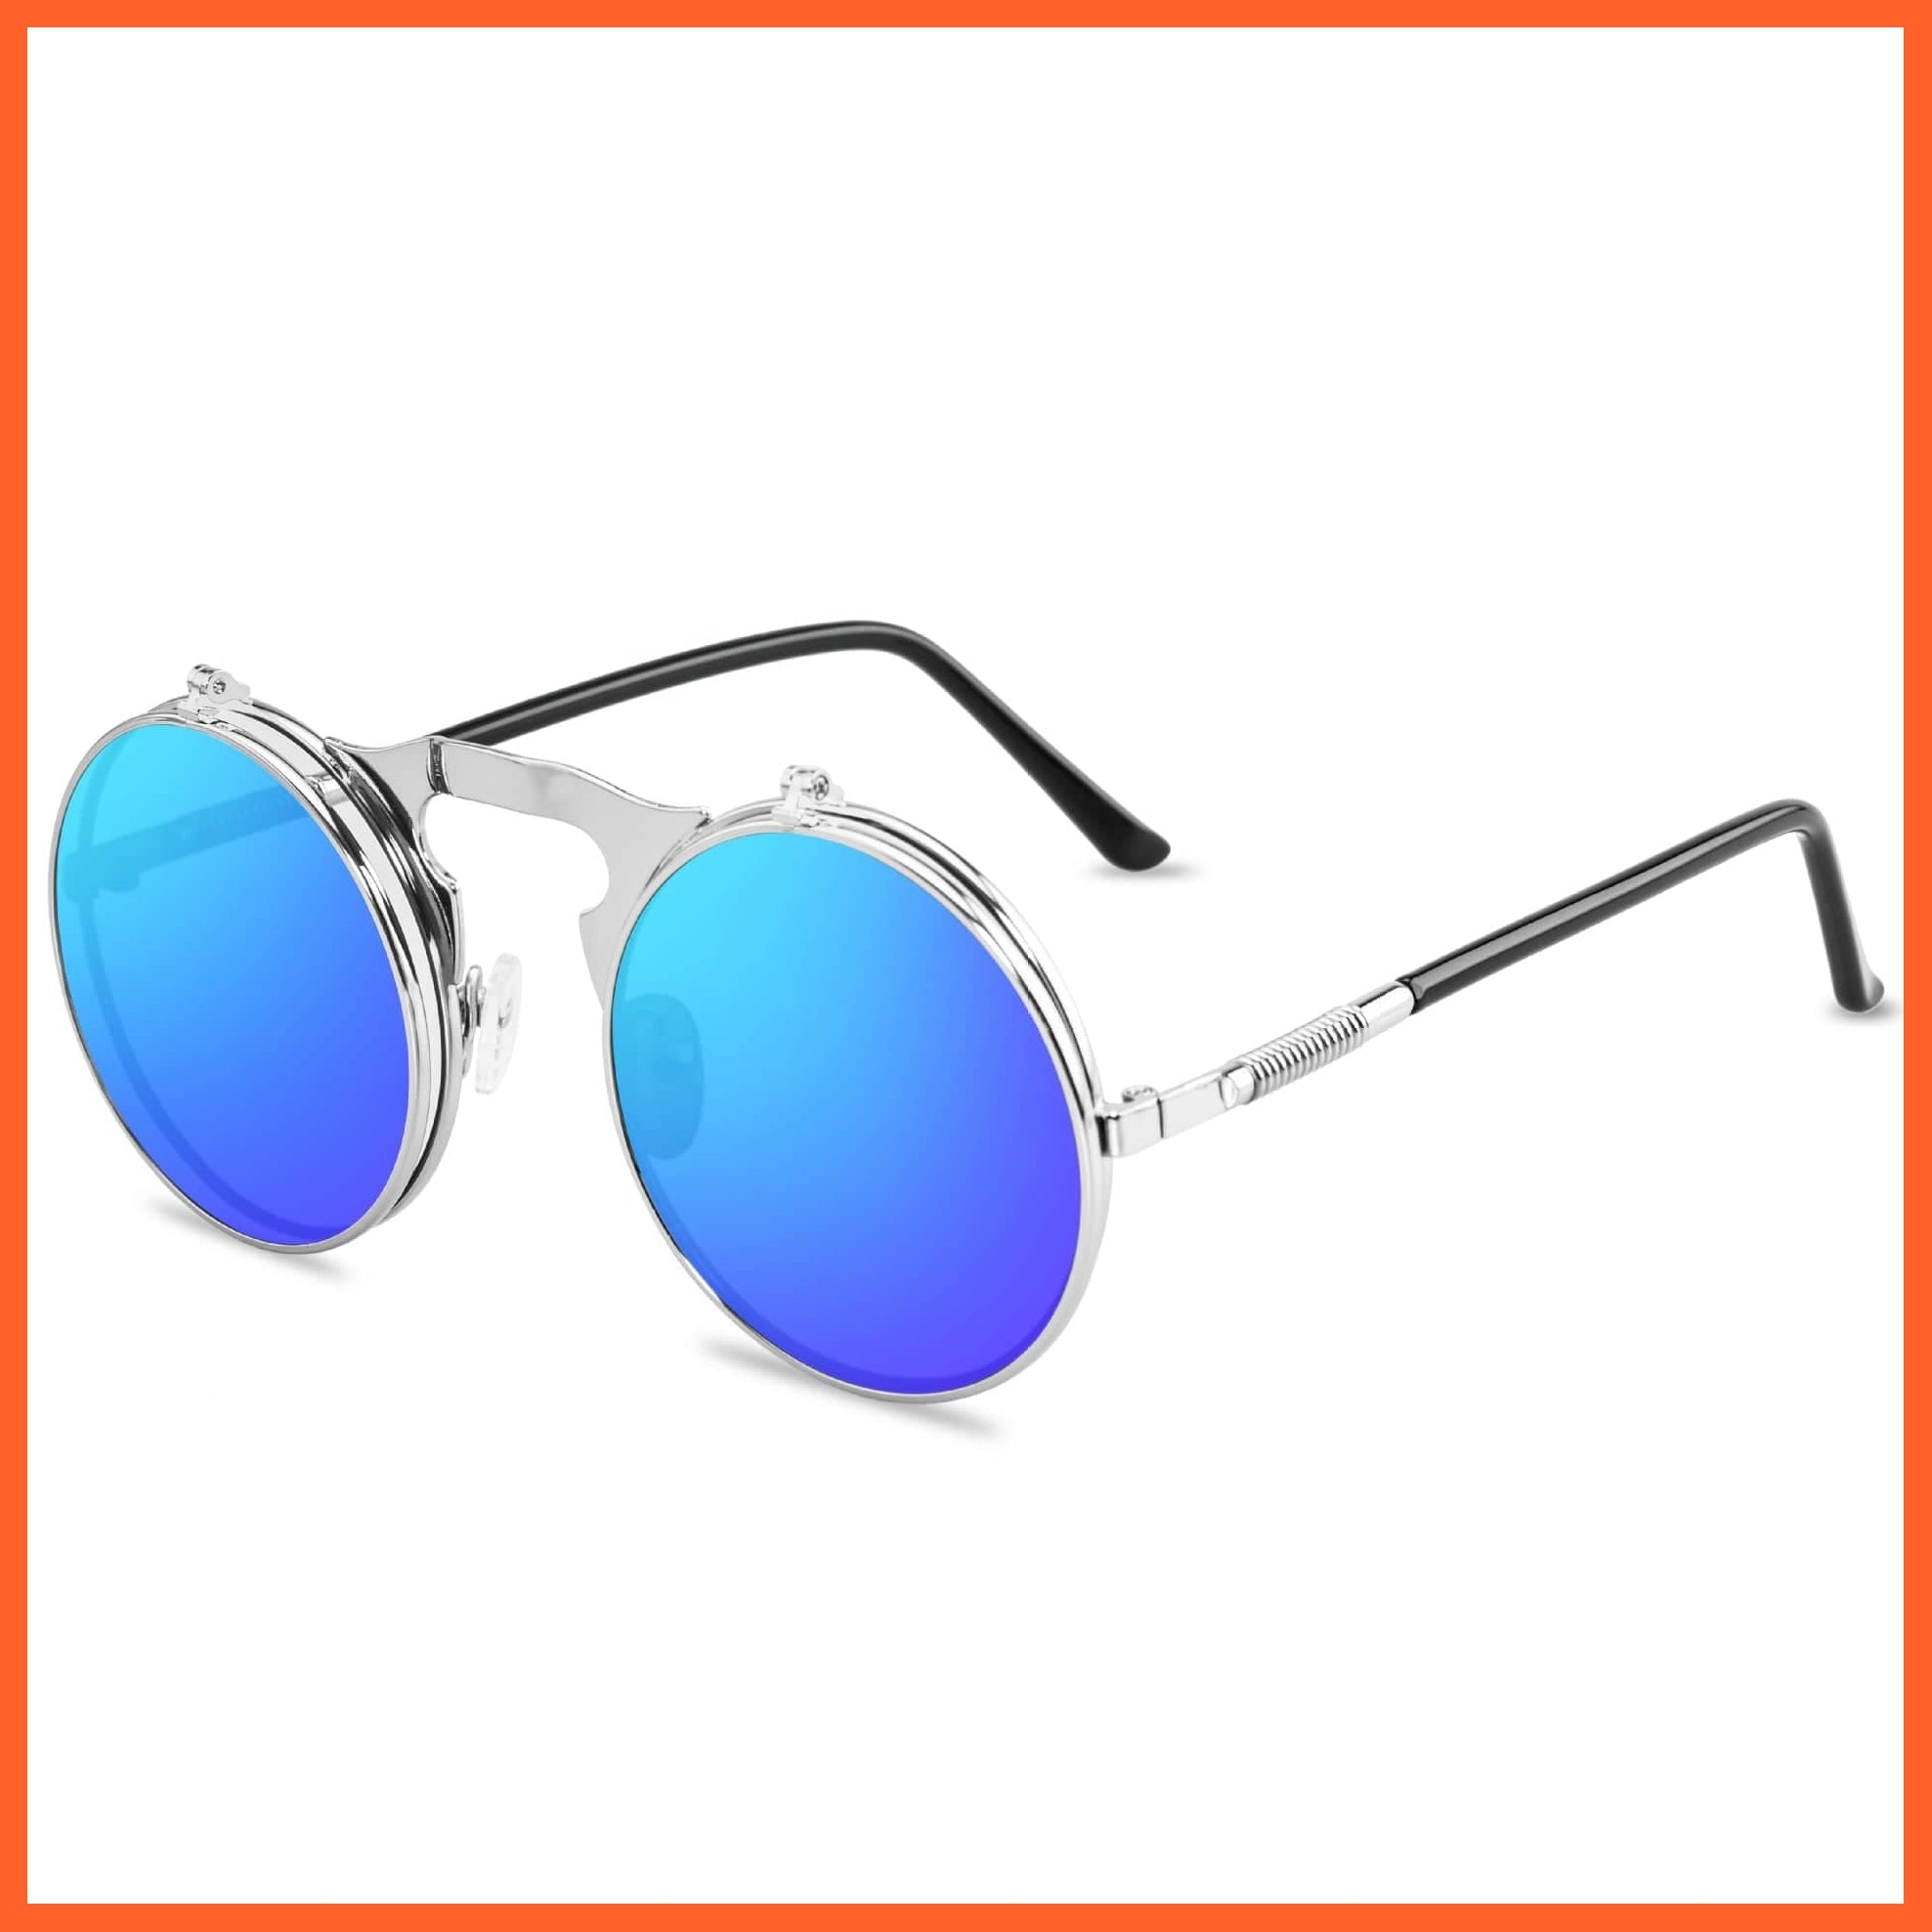 whatagift.com.au Sunglasses C4SilverBlue / Other Vintage Steampunk Flip Sunglasses | Men Women Retro Round Metal Frame Glasses